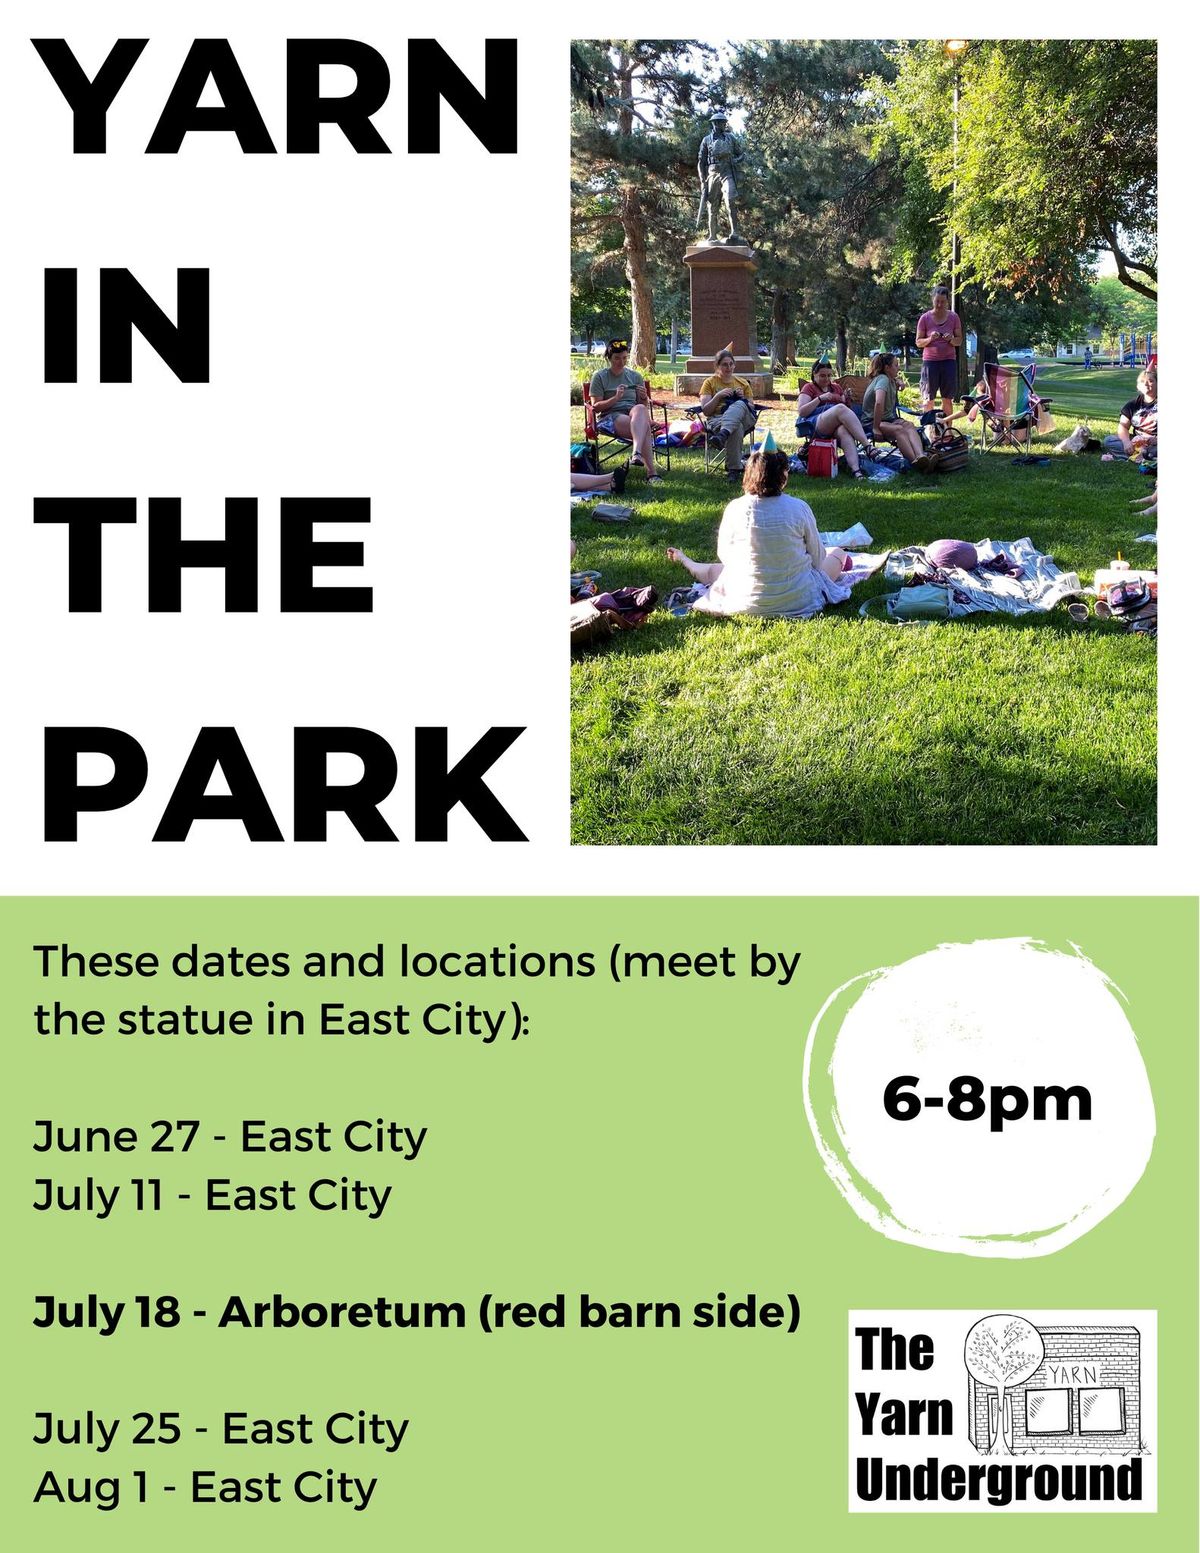 Yarn in the Park - July 18